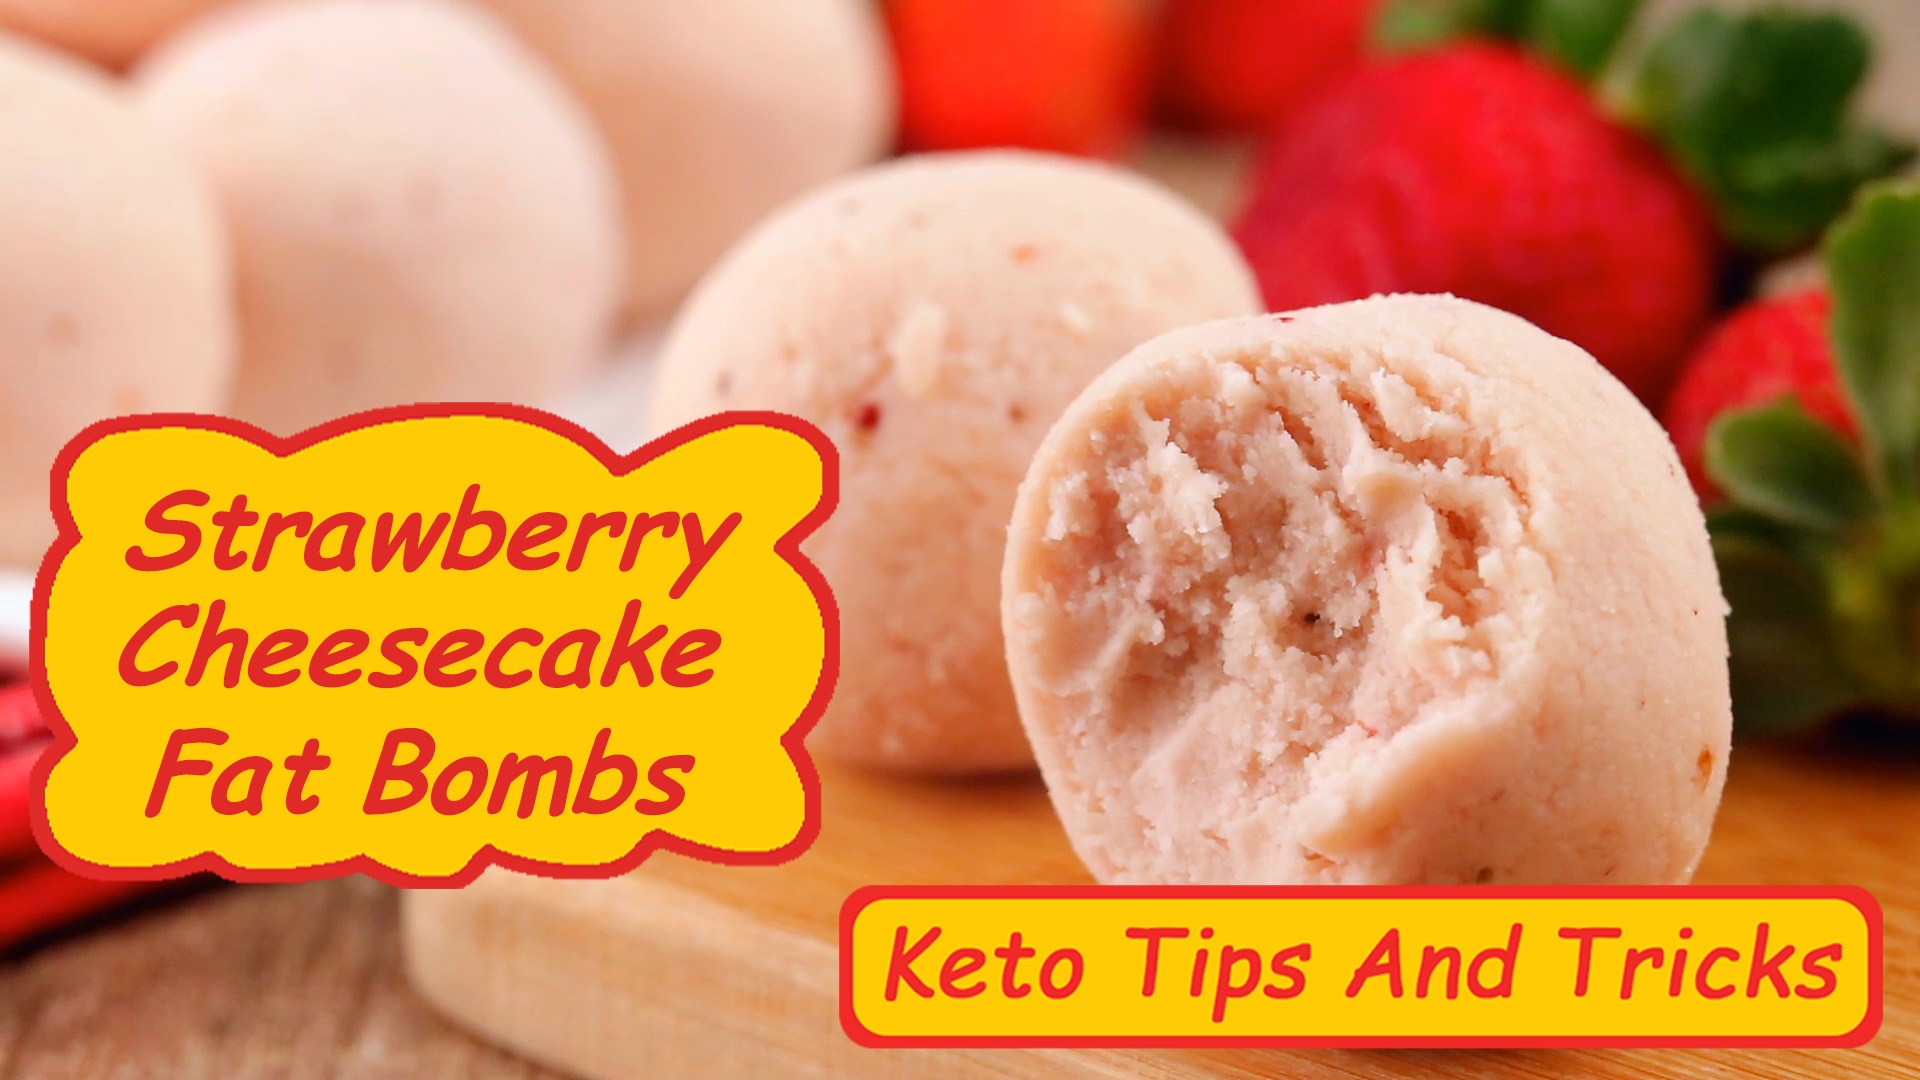 Thumbnail from "Keto Strawberry Cheesecake Fat Bombs" recipe video.